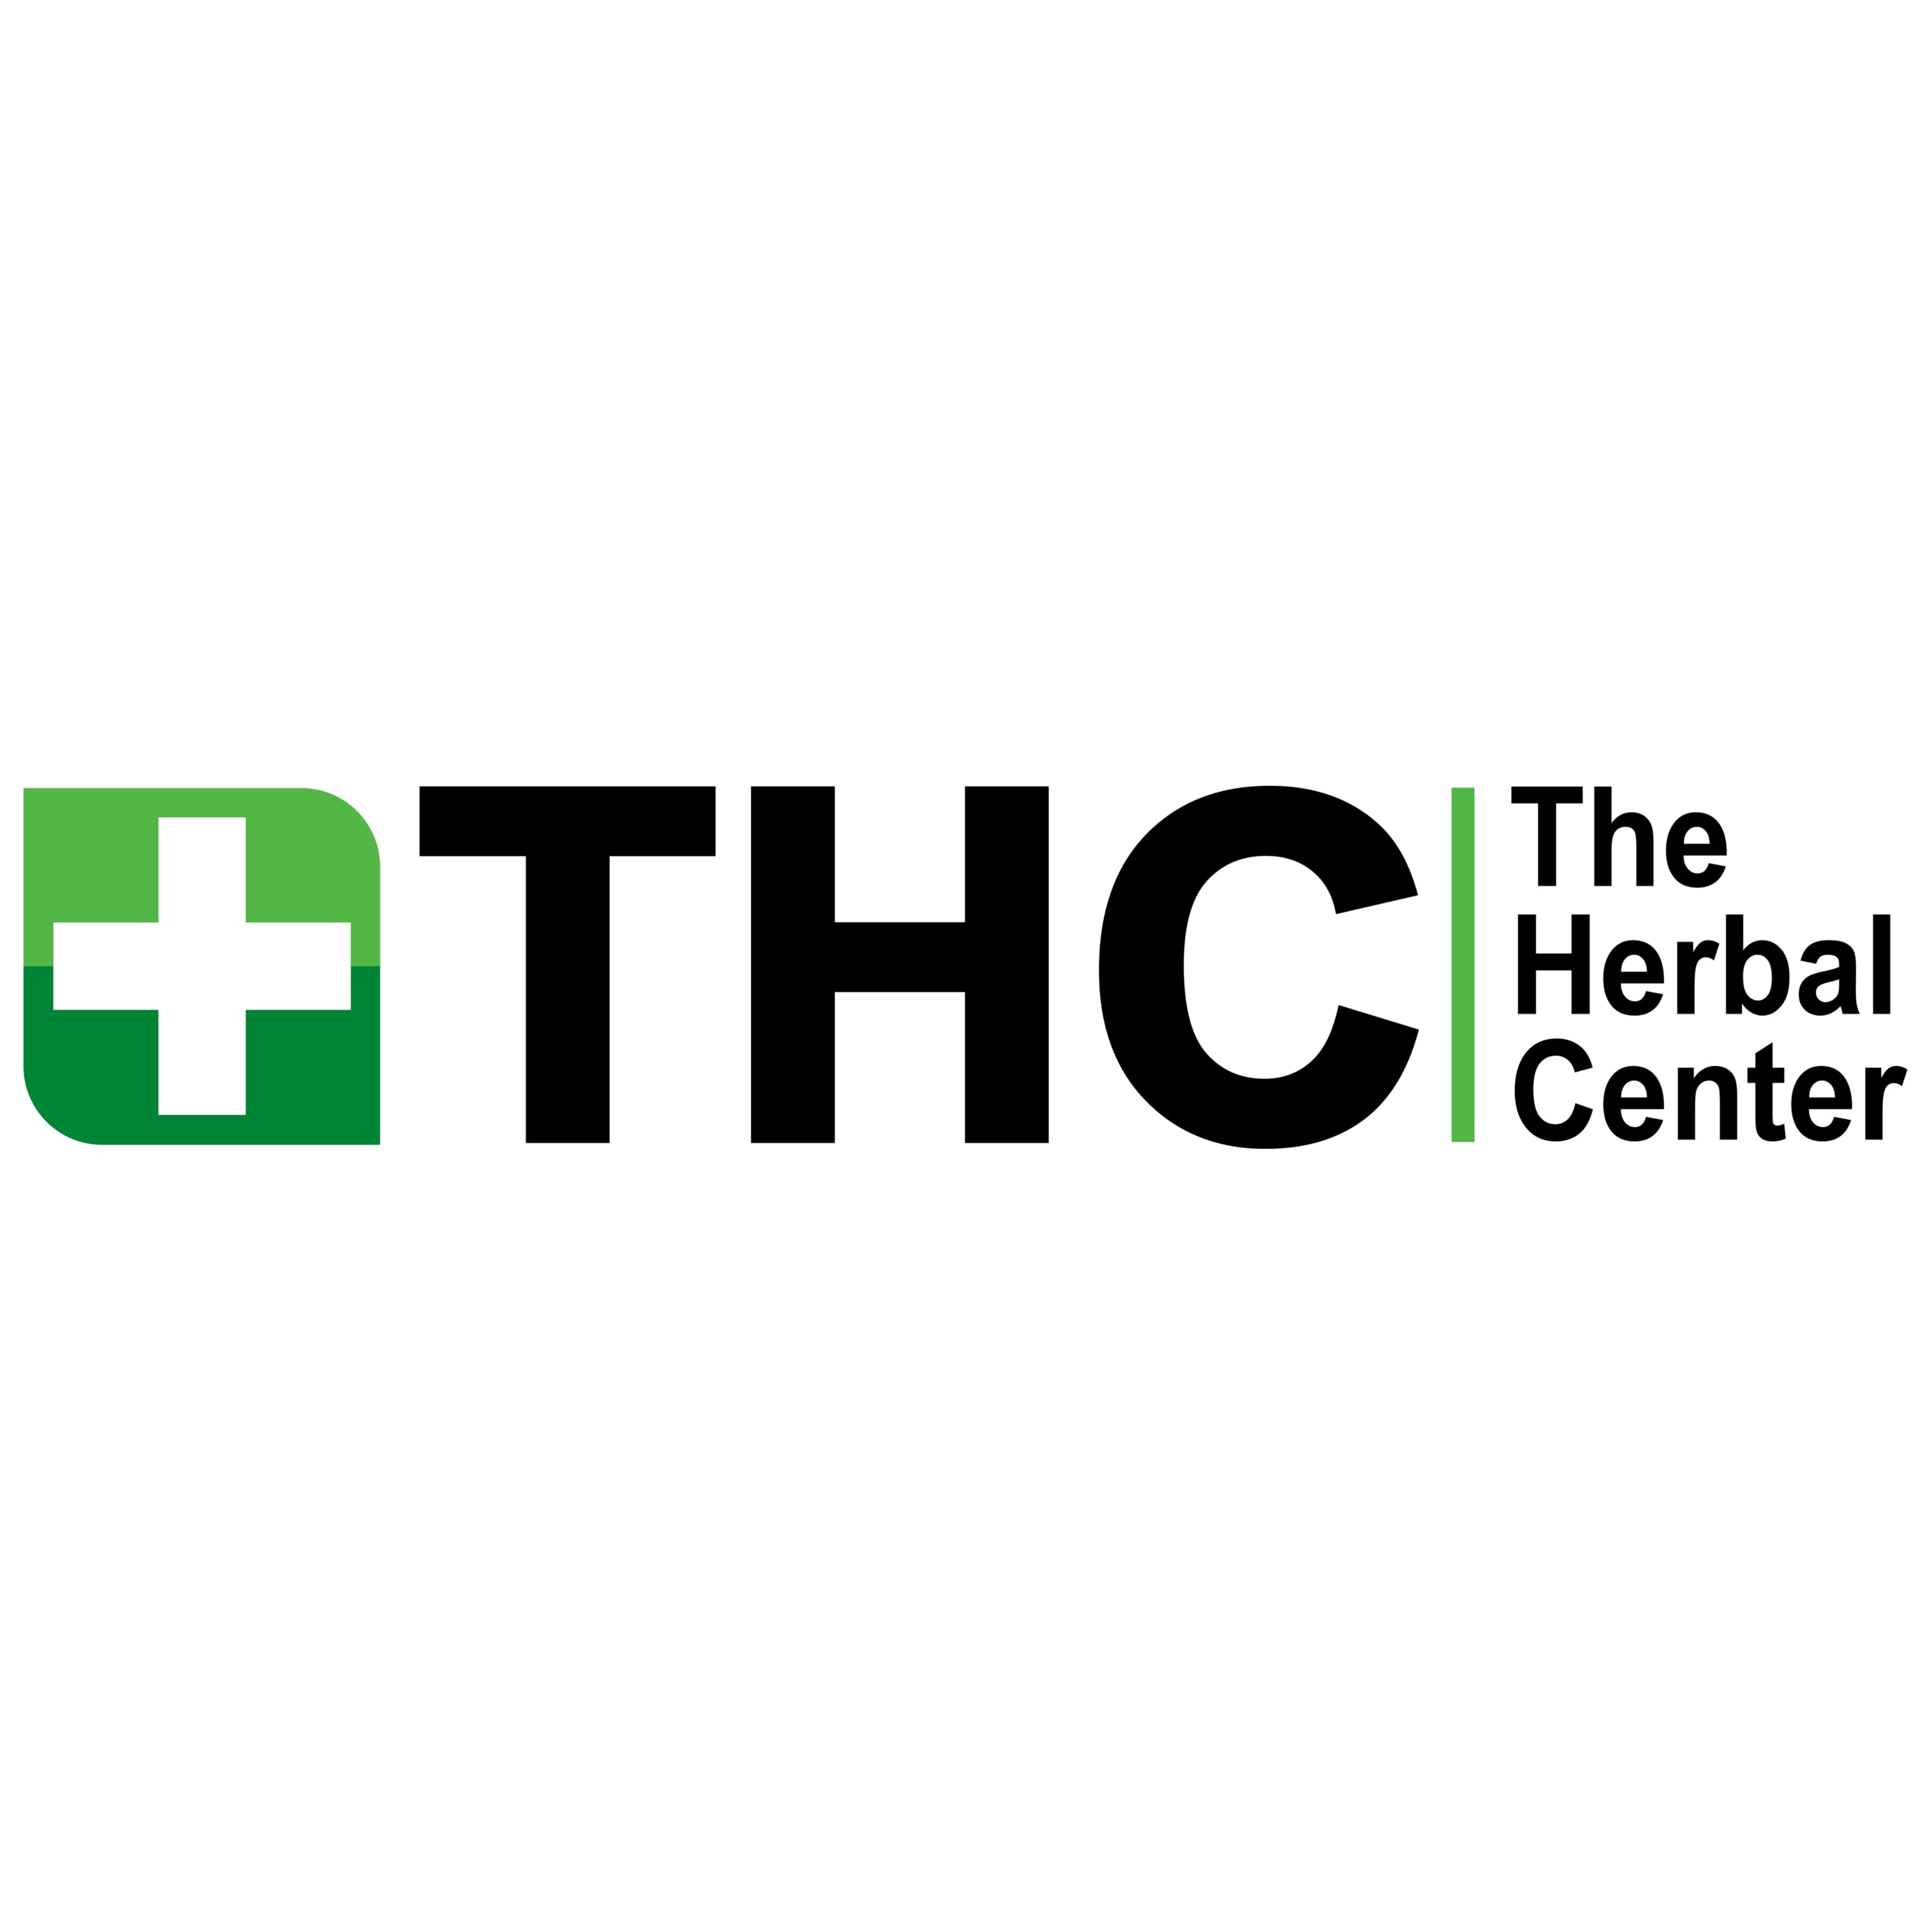 The Herbal Center - Peoria MED - Medical Marijuana Doctors - Cannabizme.com